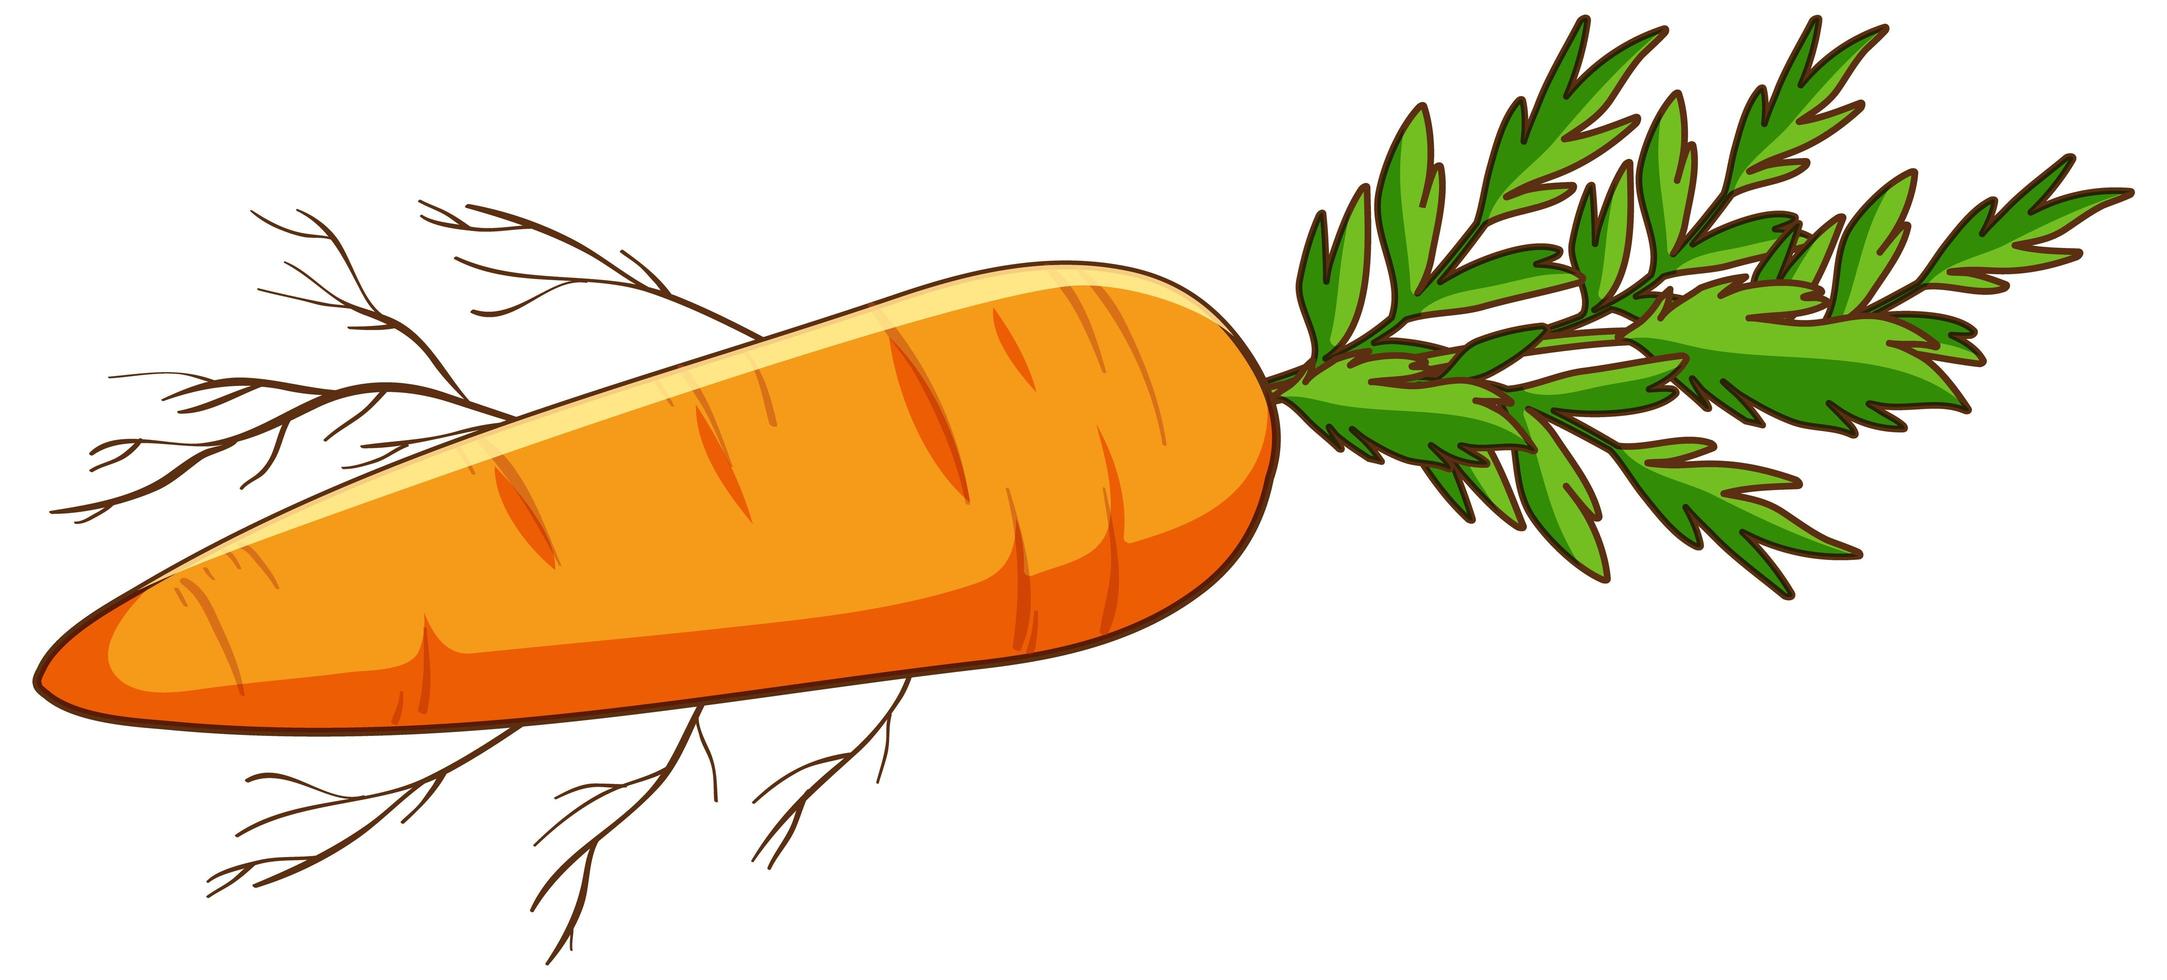 zanahoria simple sobre fondo blanco vector